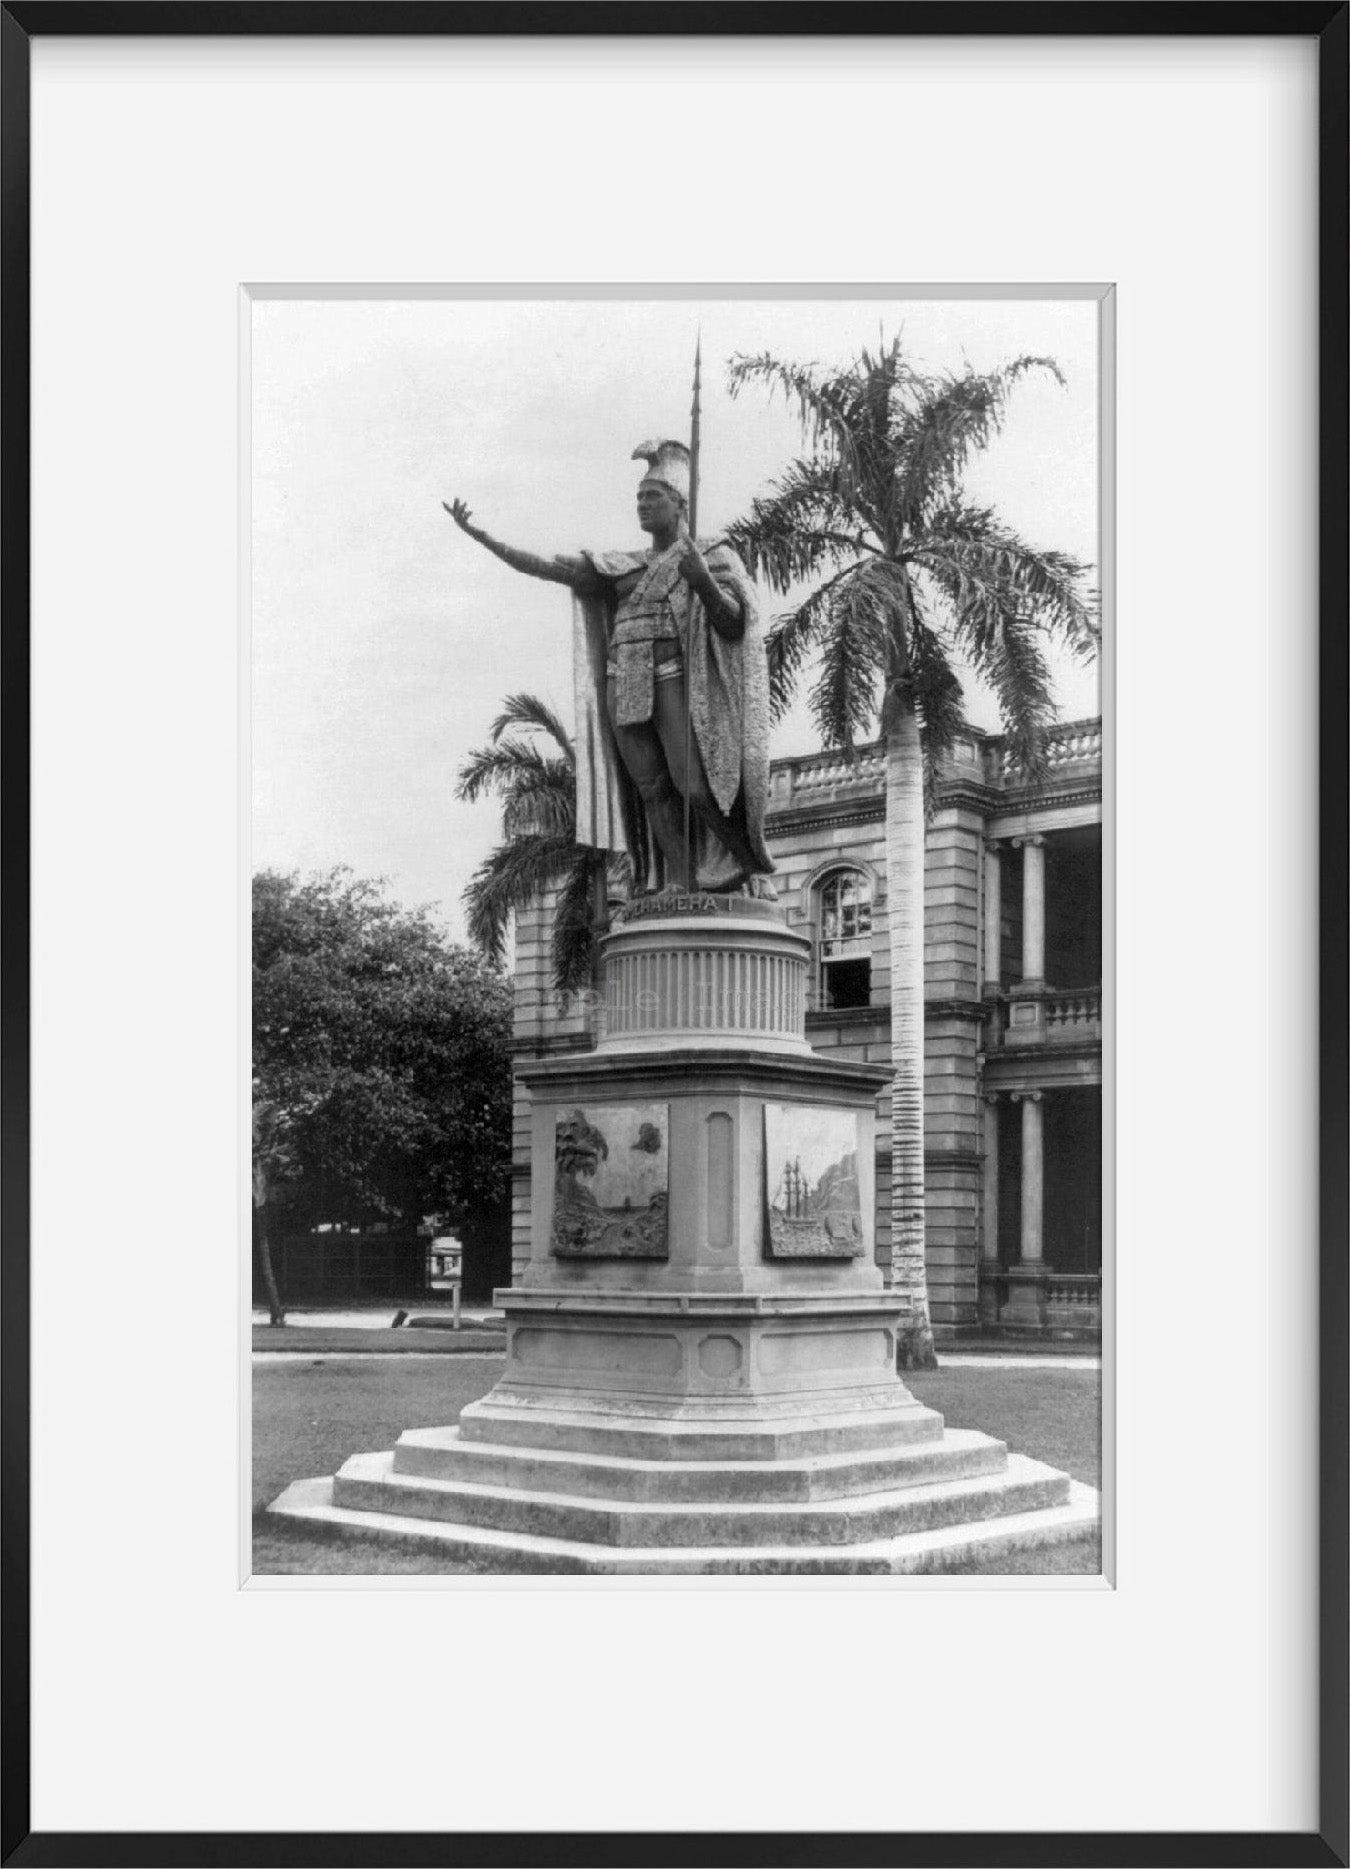 Photo: Kamehameha I, the great, Photo of Statue, 1900-1923, King of Hawaiian Islands